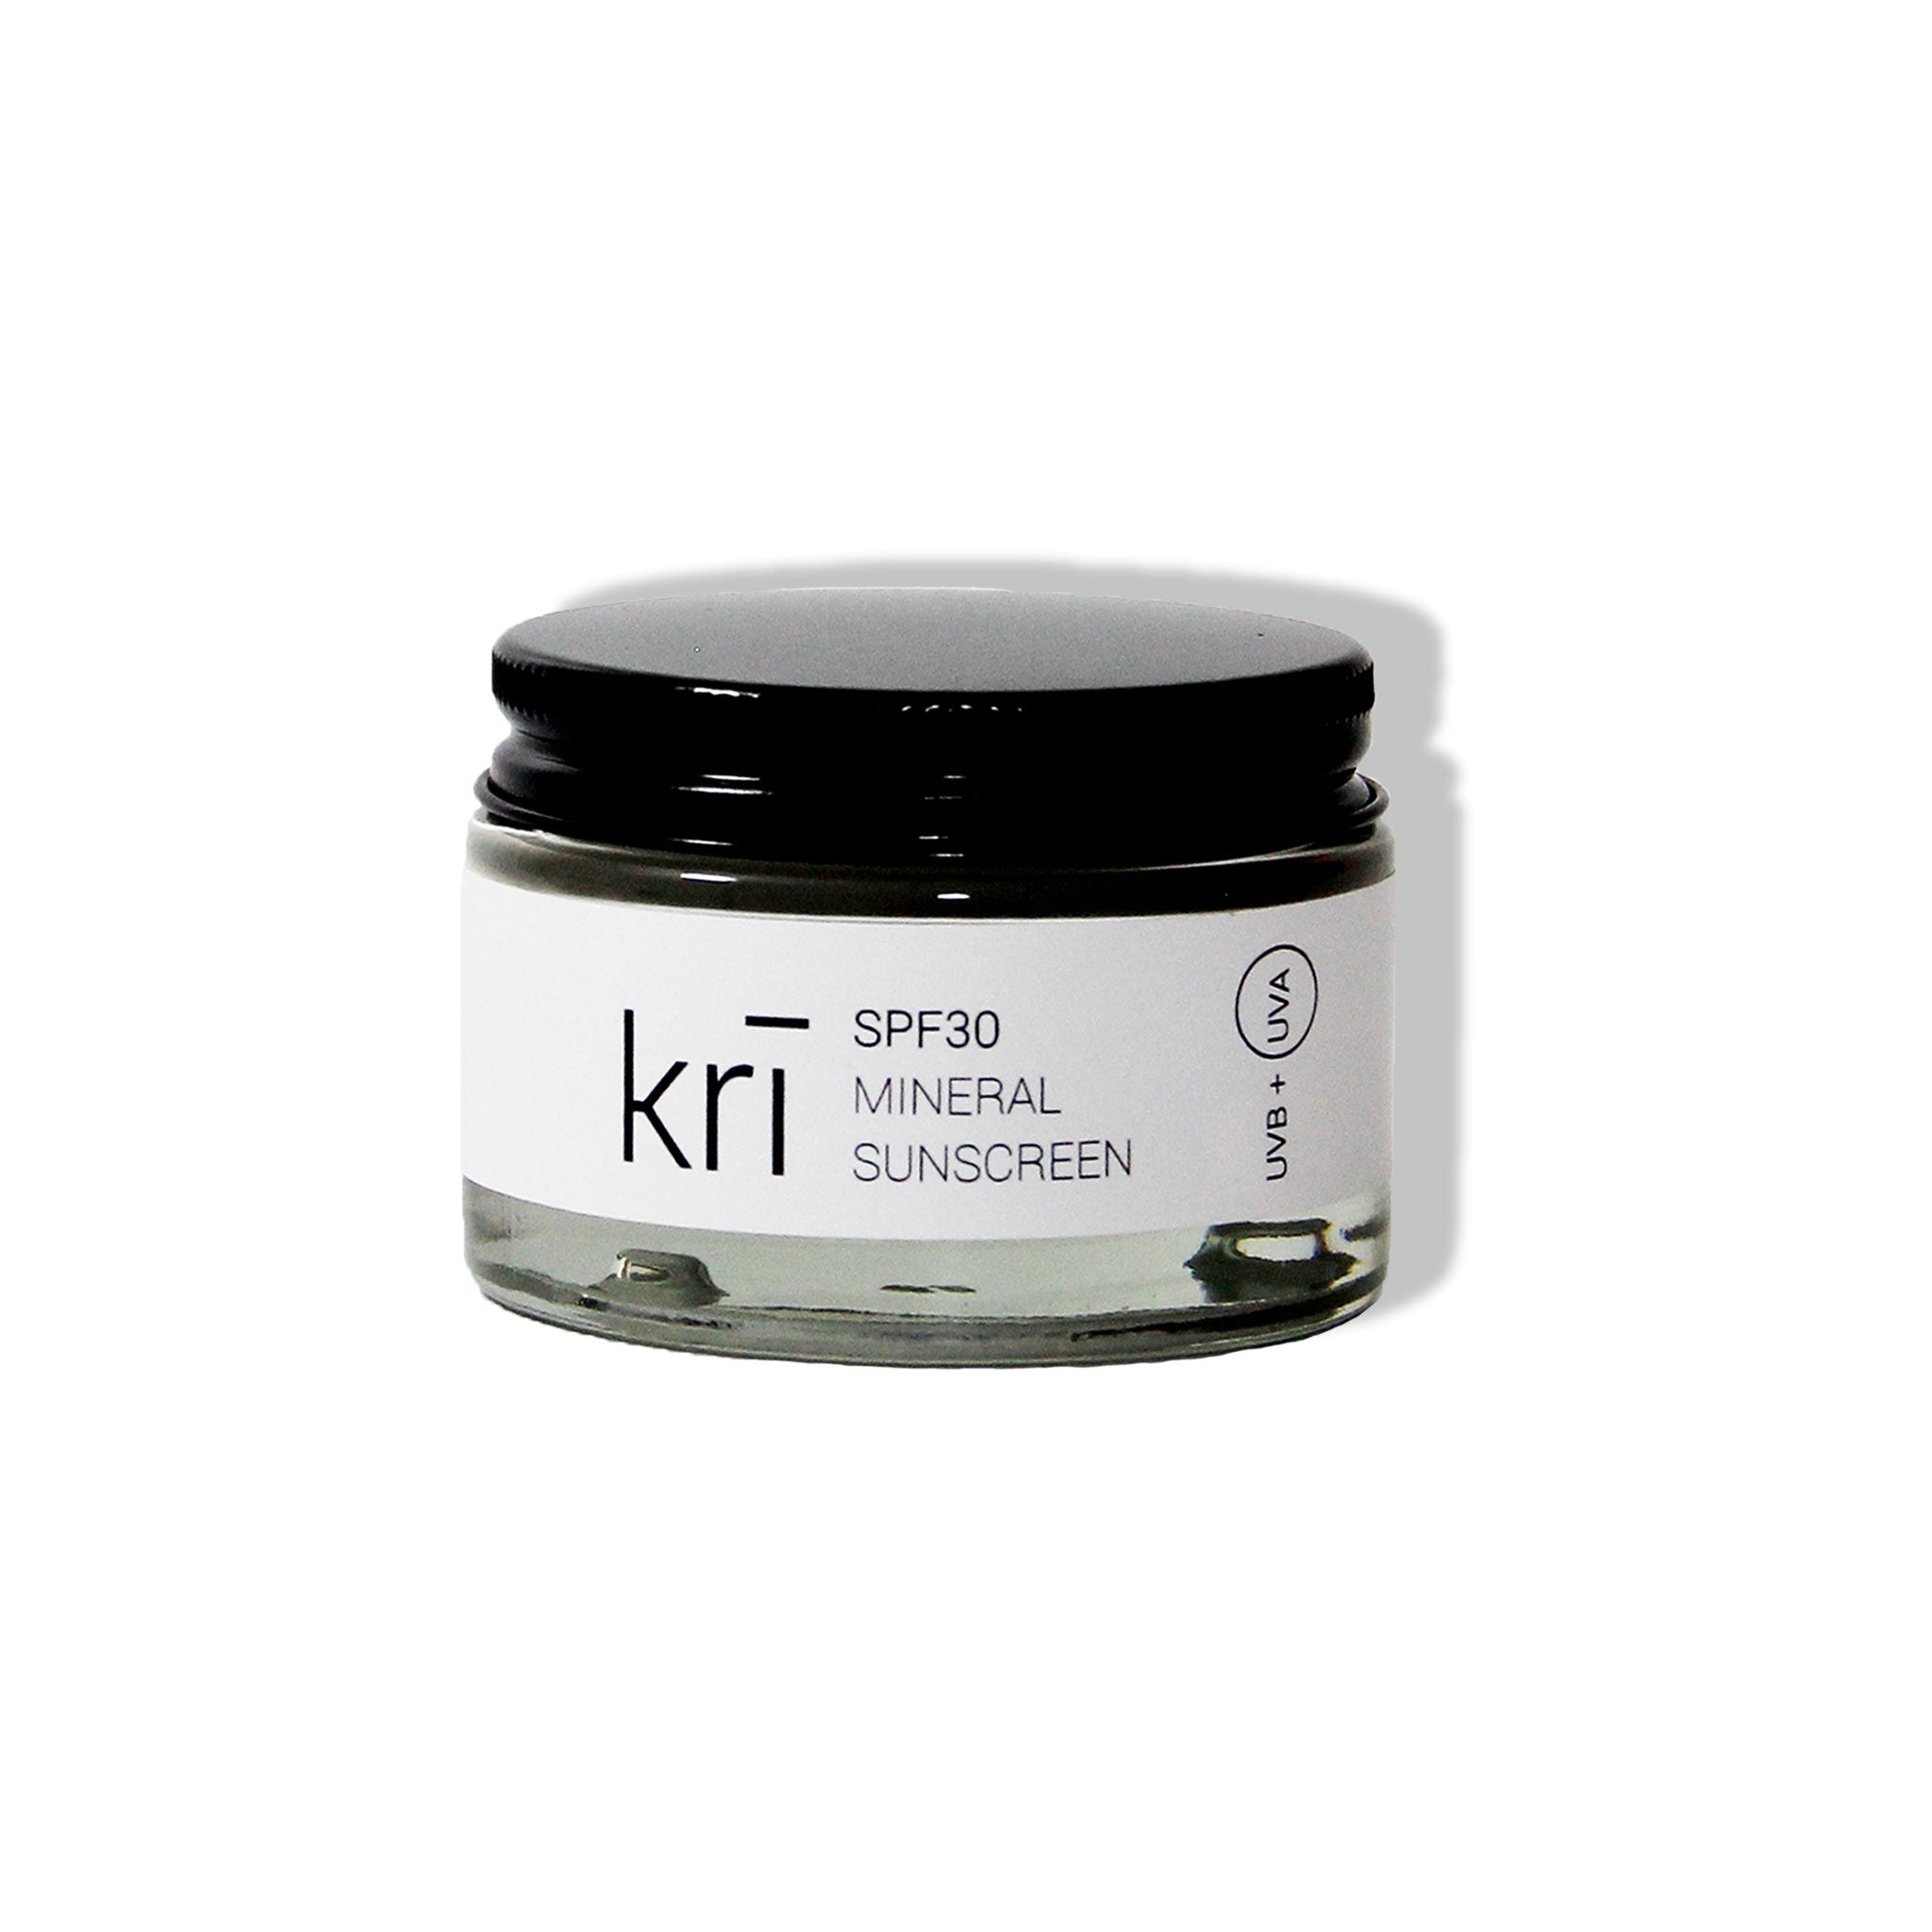 SPF 30 Mineral Sunscreen (jar)